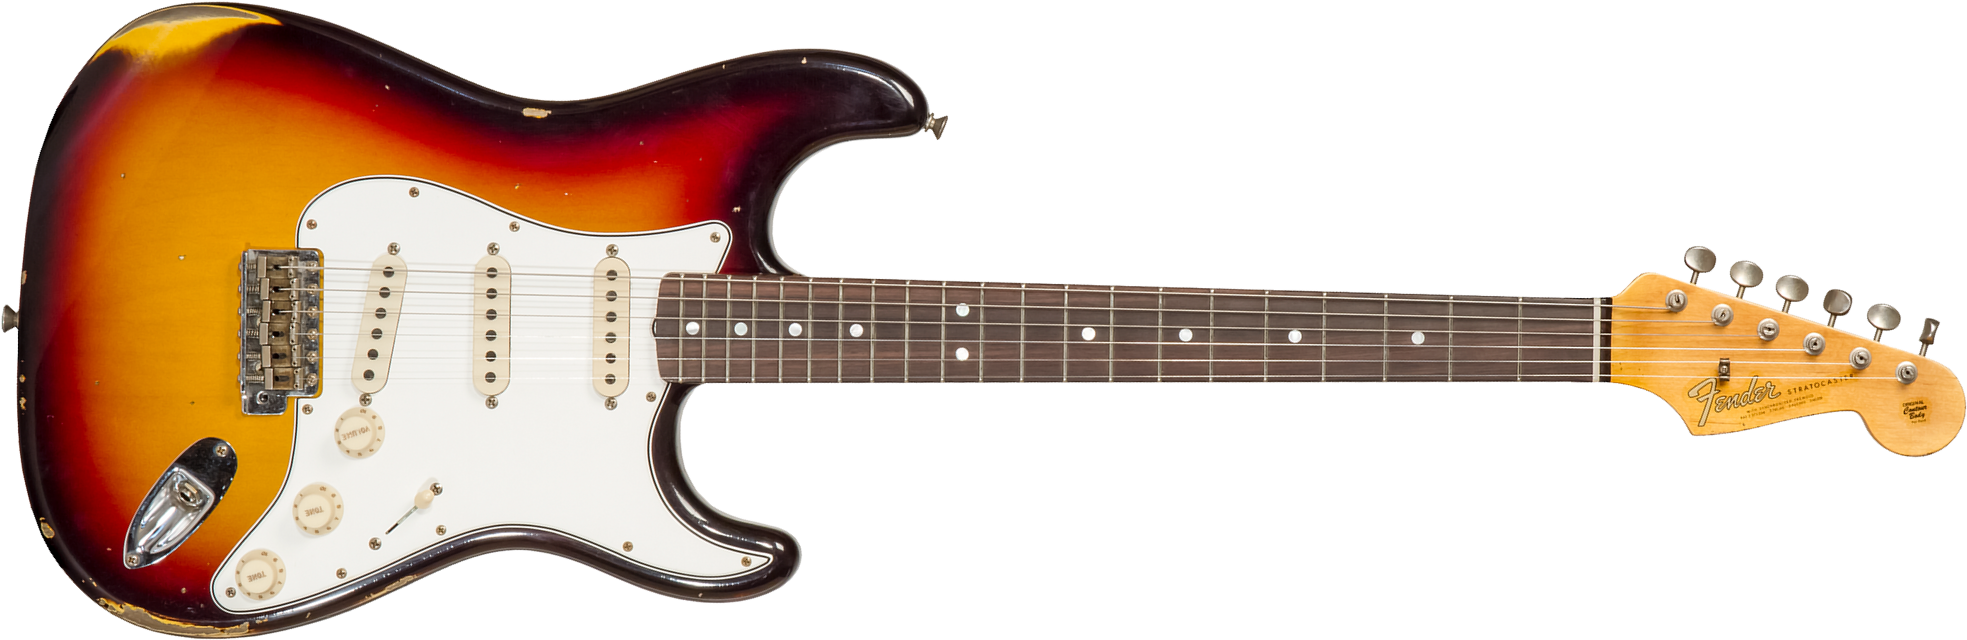 Fender Custom Shop Strat Late 1964 3s Trem Rw #cz569756 - Relic Target 3-color Sunburst - Elektrische gitaar in Str-vorm - Main picture